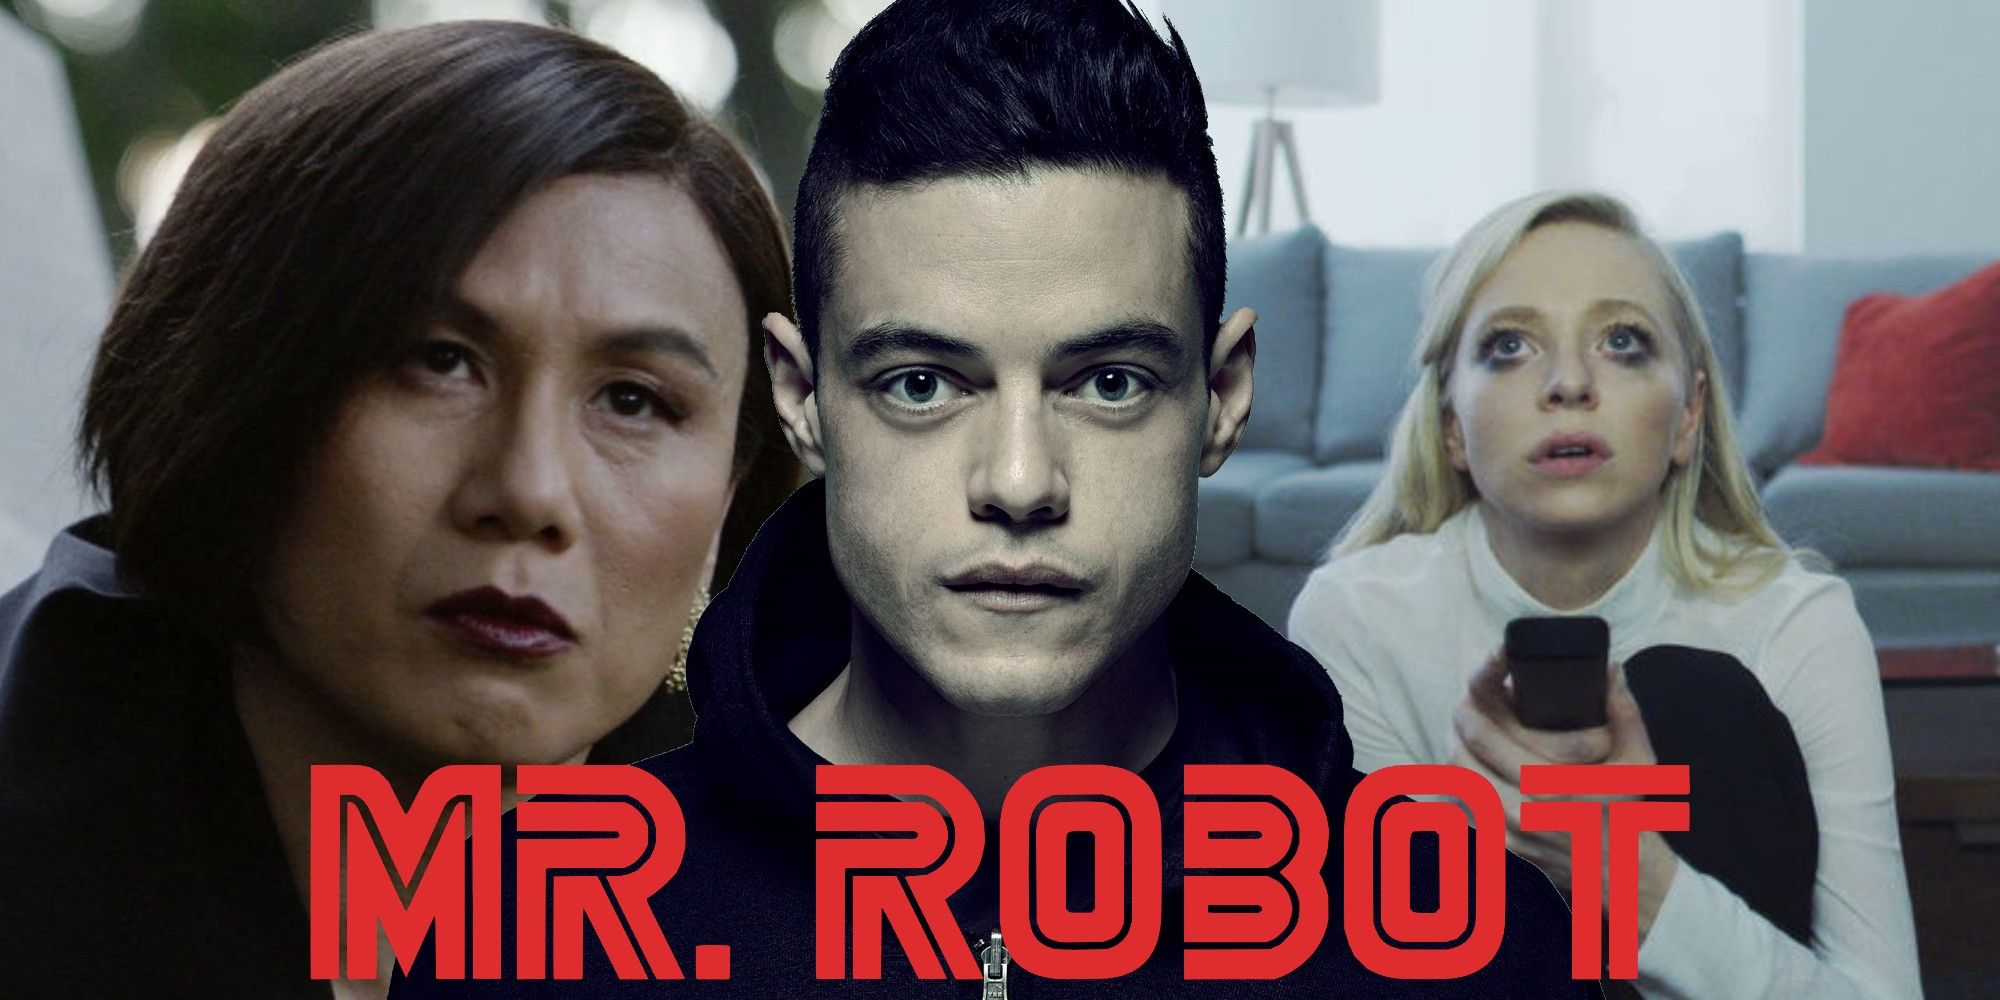 Mr. Robot season 2 premiere: A bold return episode shows off the